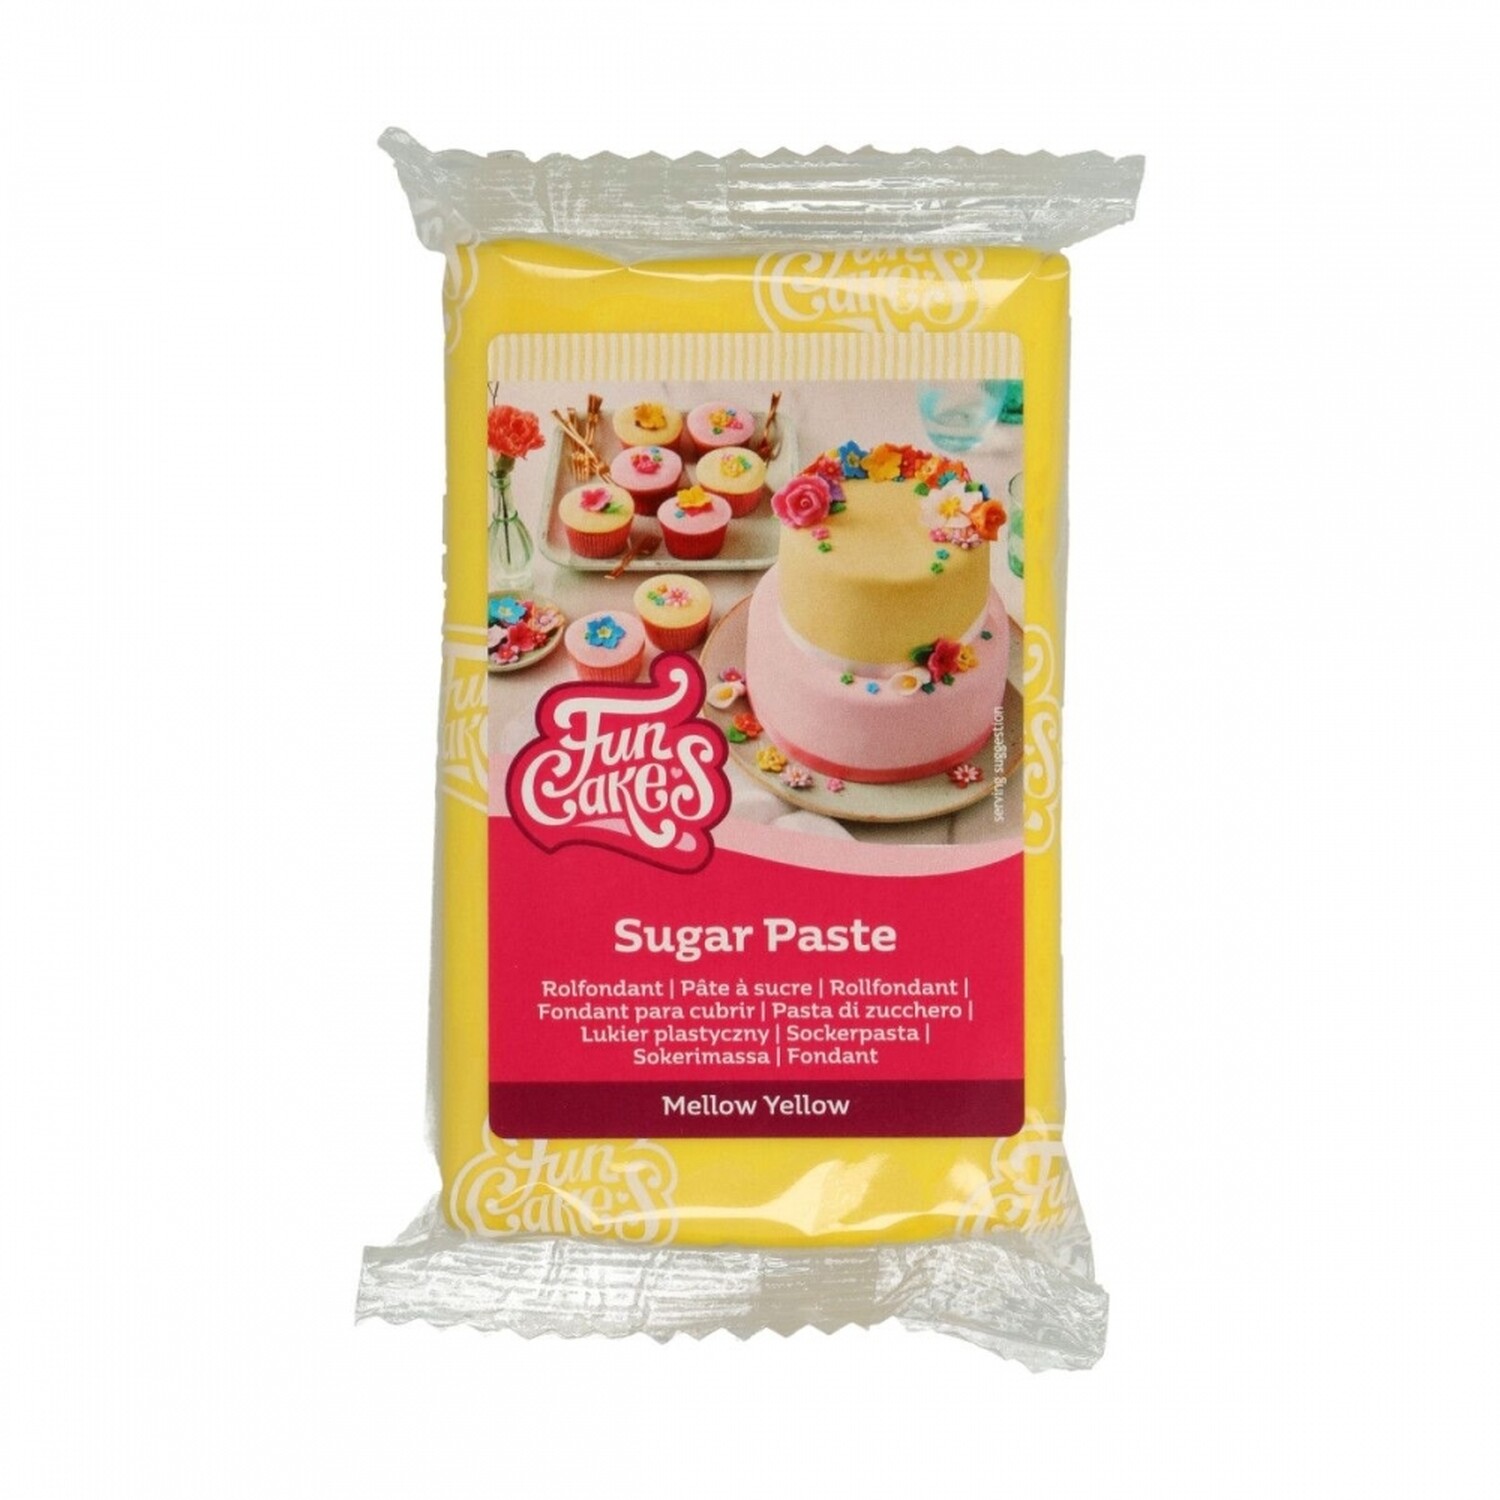 Funcakes Sugar Paste - Mellow Yellow Image